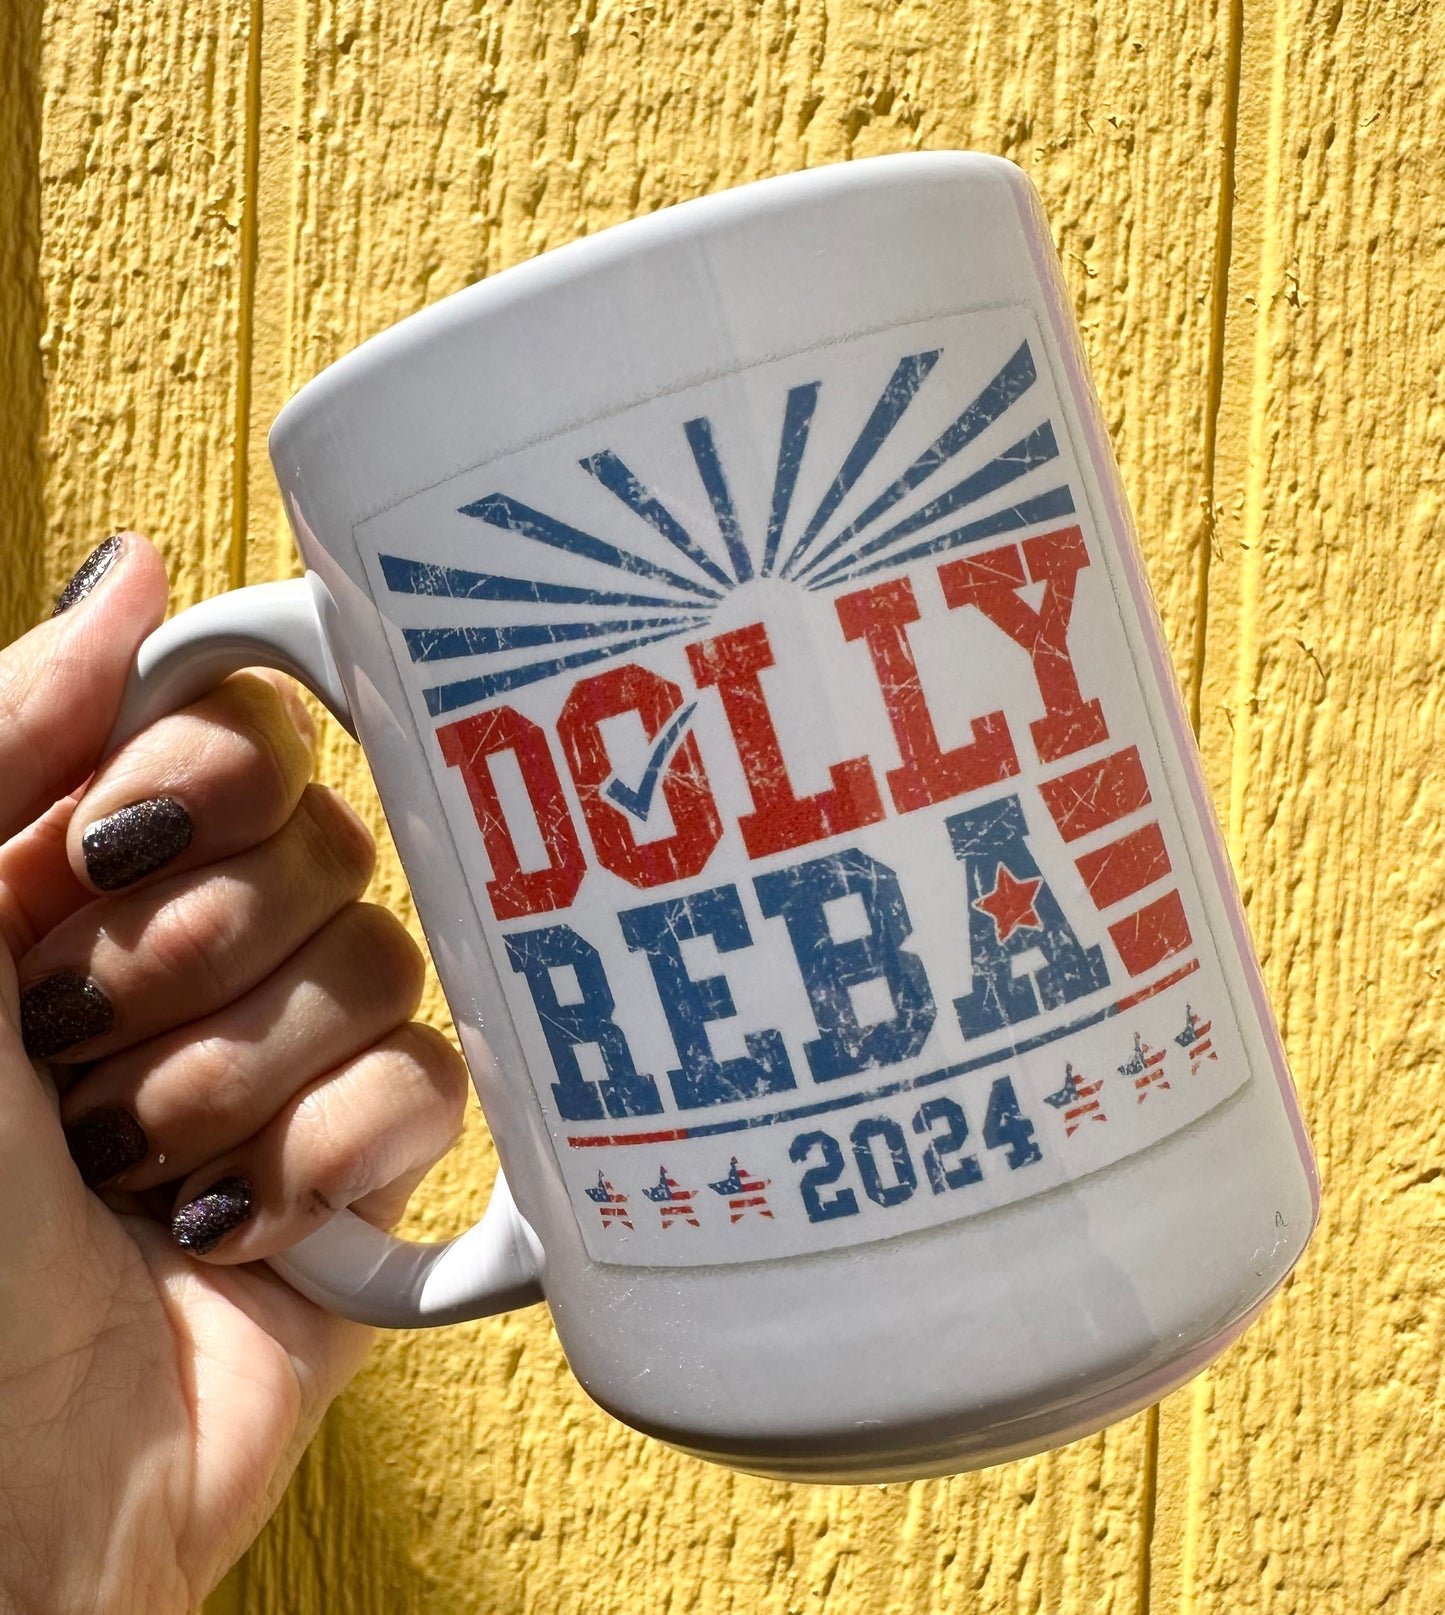 Dolly Reba 2024 15 oz Mug